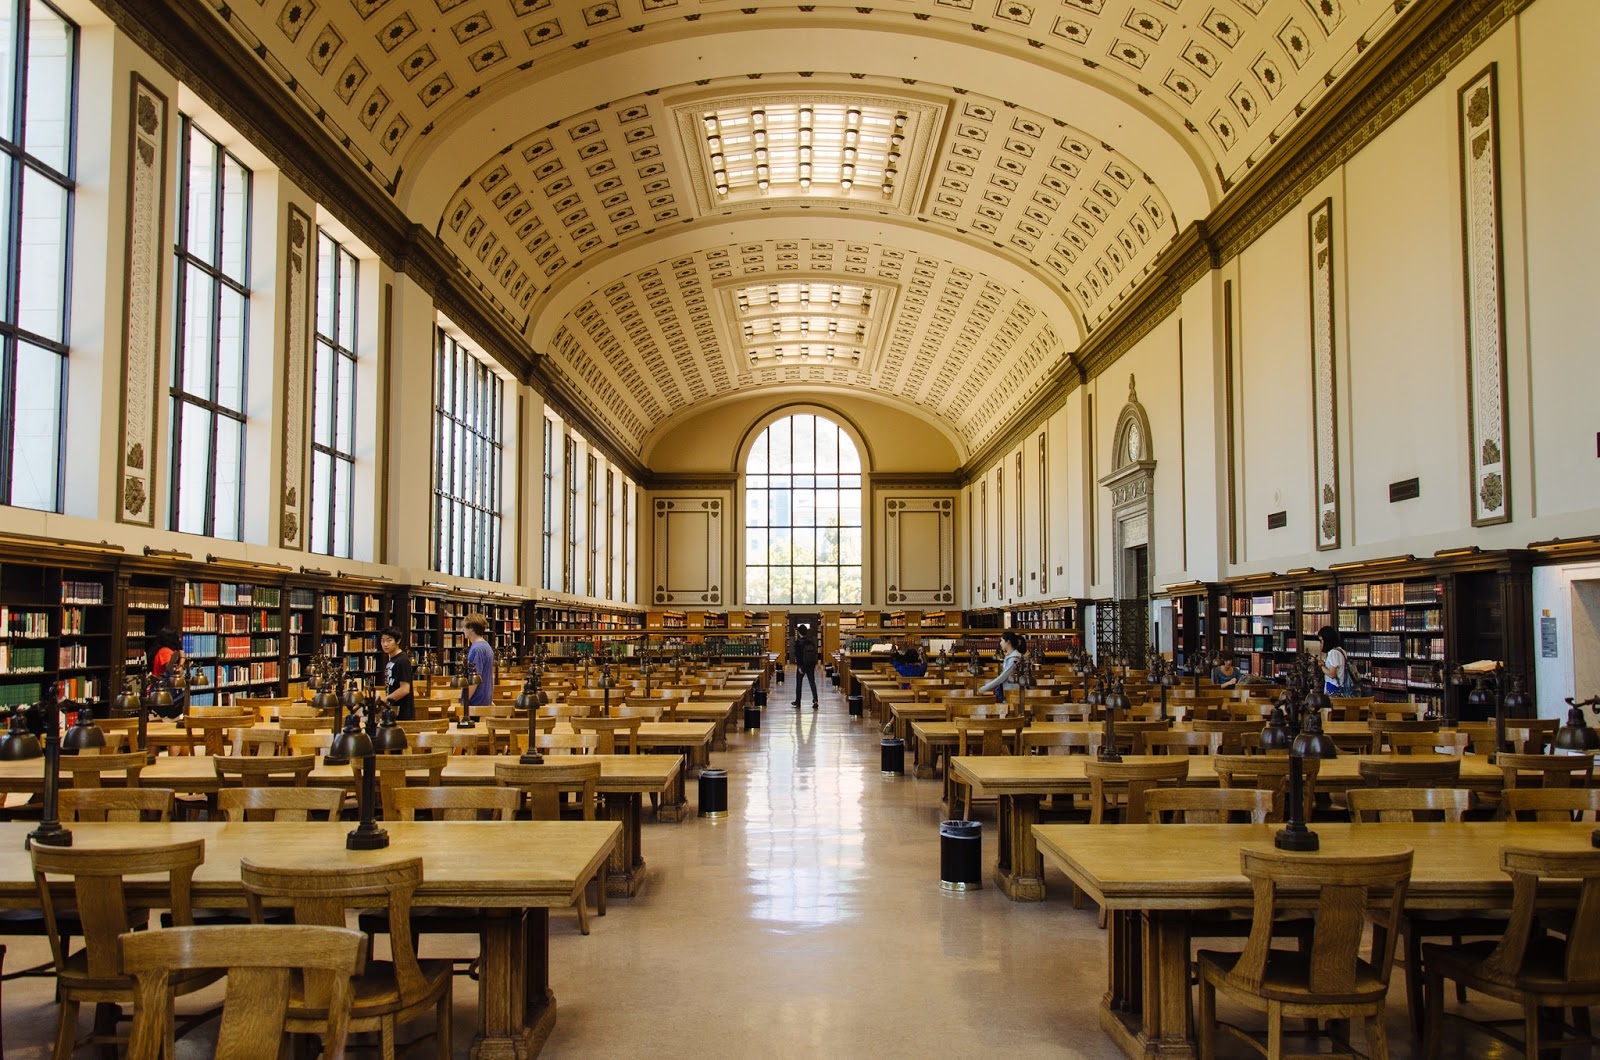 North Reading Room Doe Library Berkeley 01.jpg